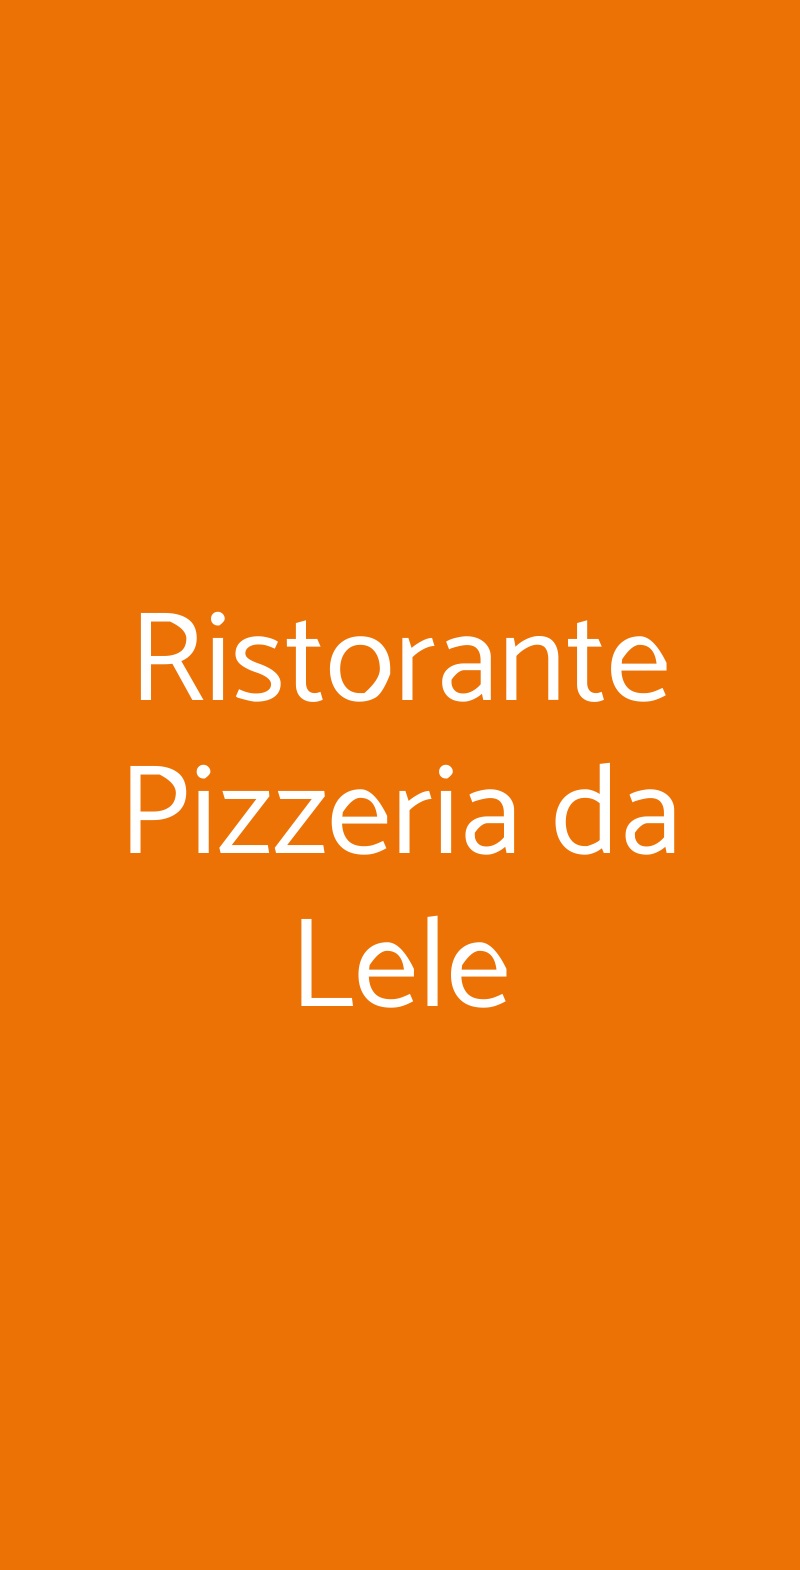 Ristorante Pizzeria da Lele Lumarzo menù 1 pagina